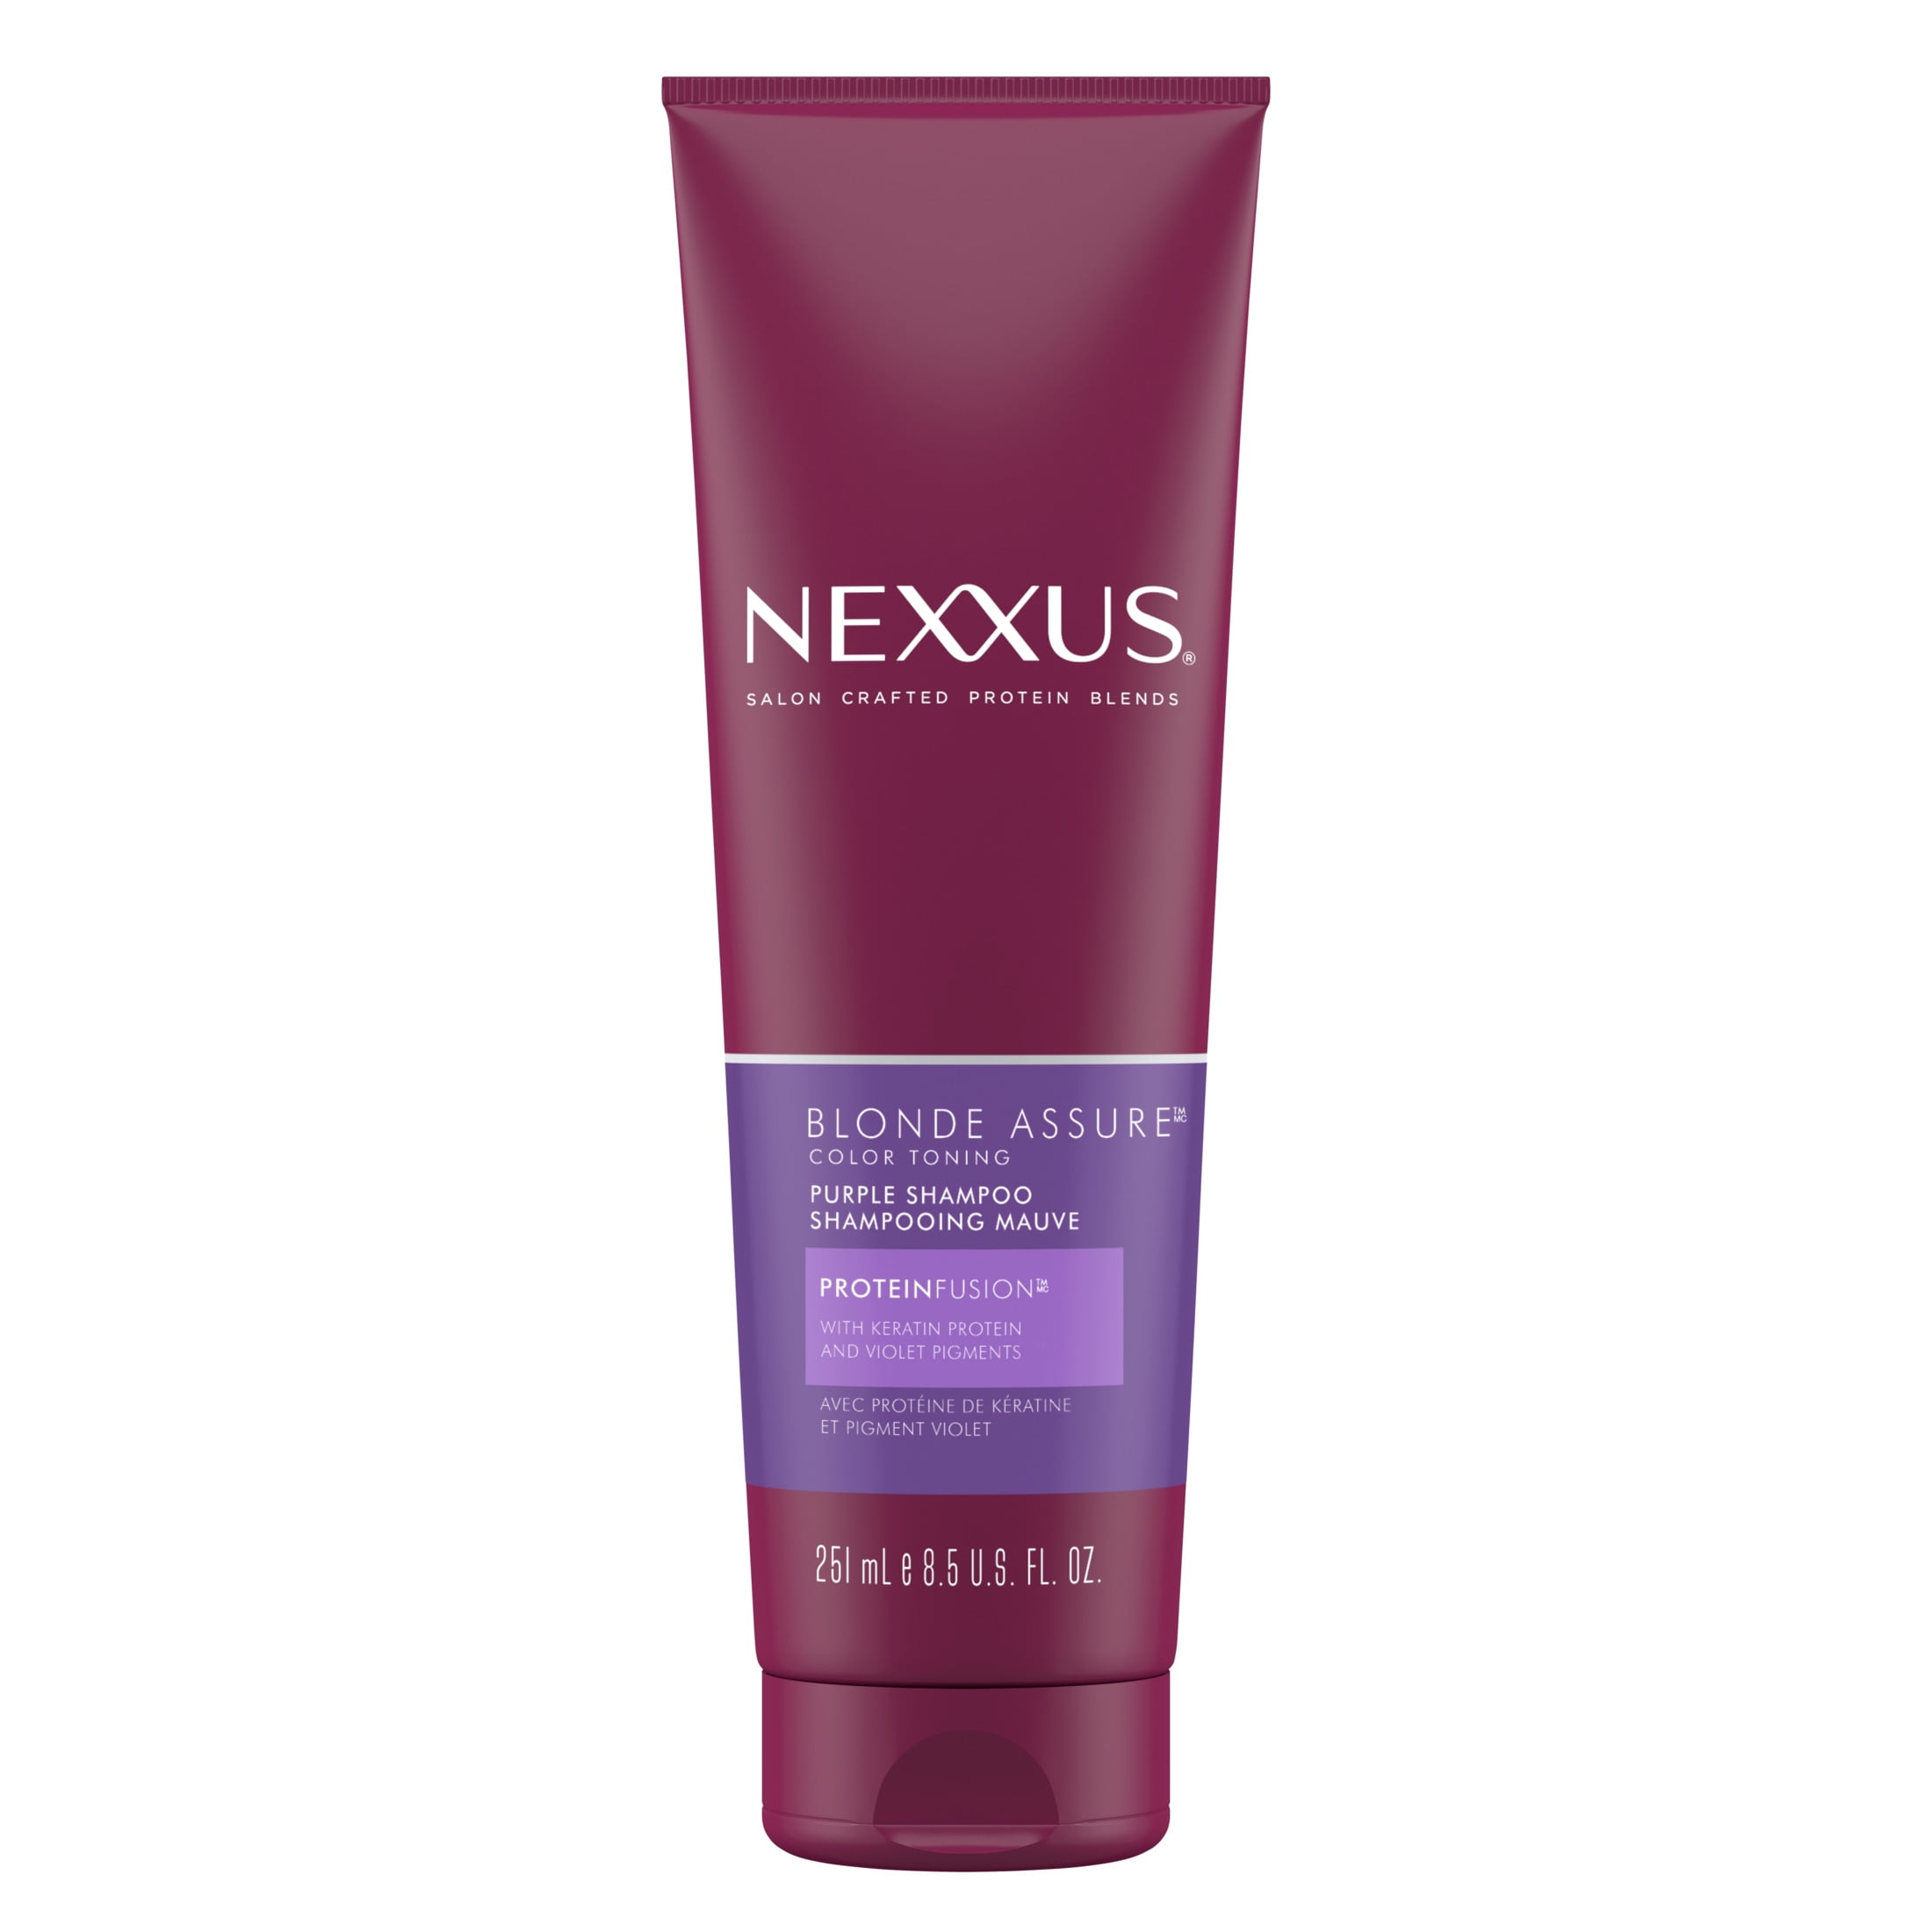 Blonde Color Blonde Care oz Hair For Assure Nexxus Protein Shampoo 8.5 Purple, Keratin